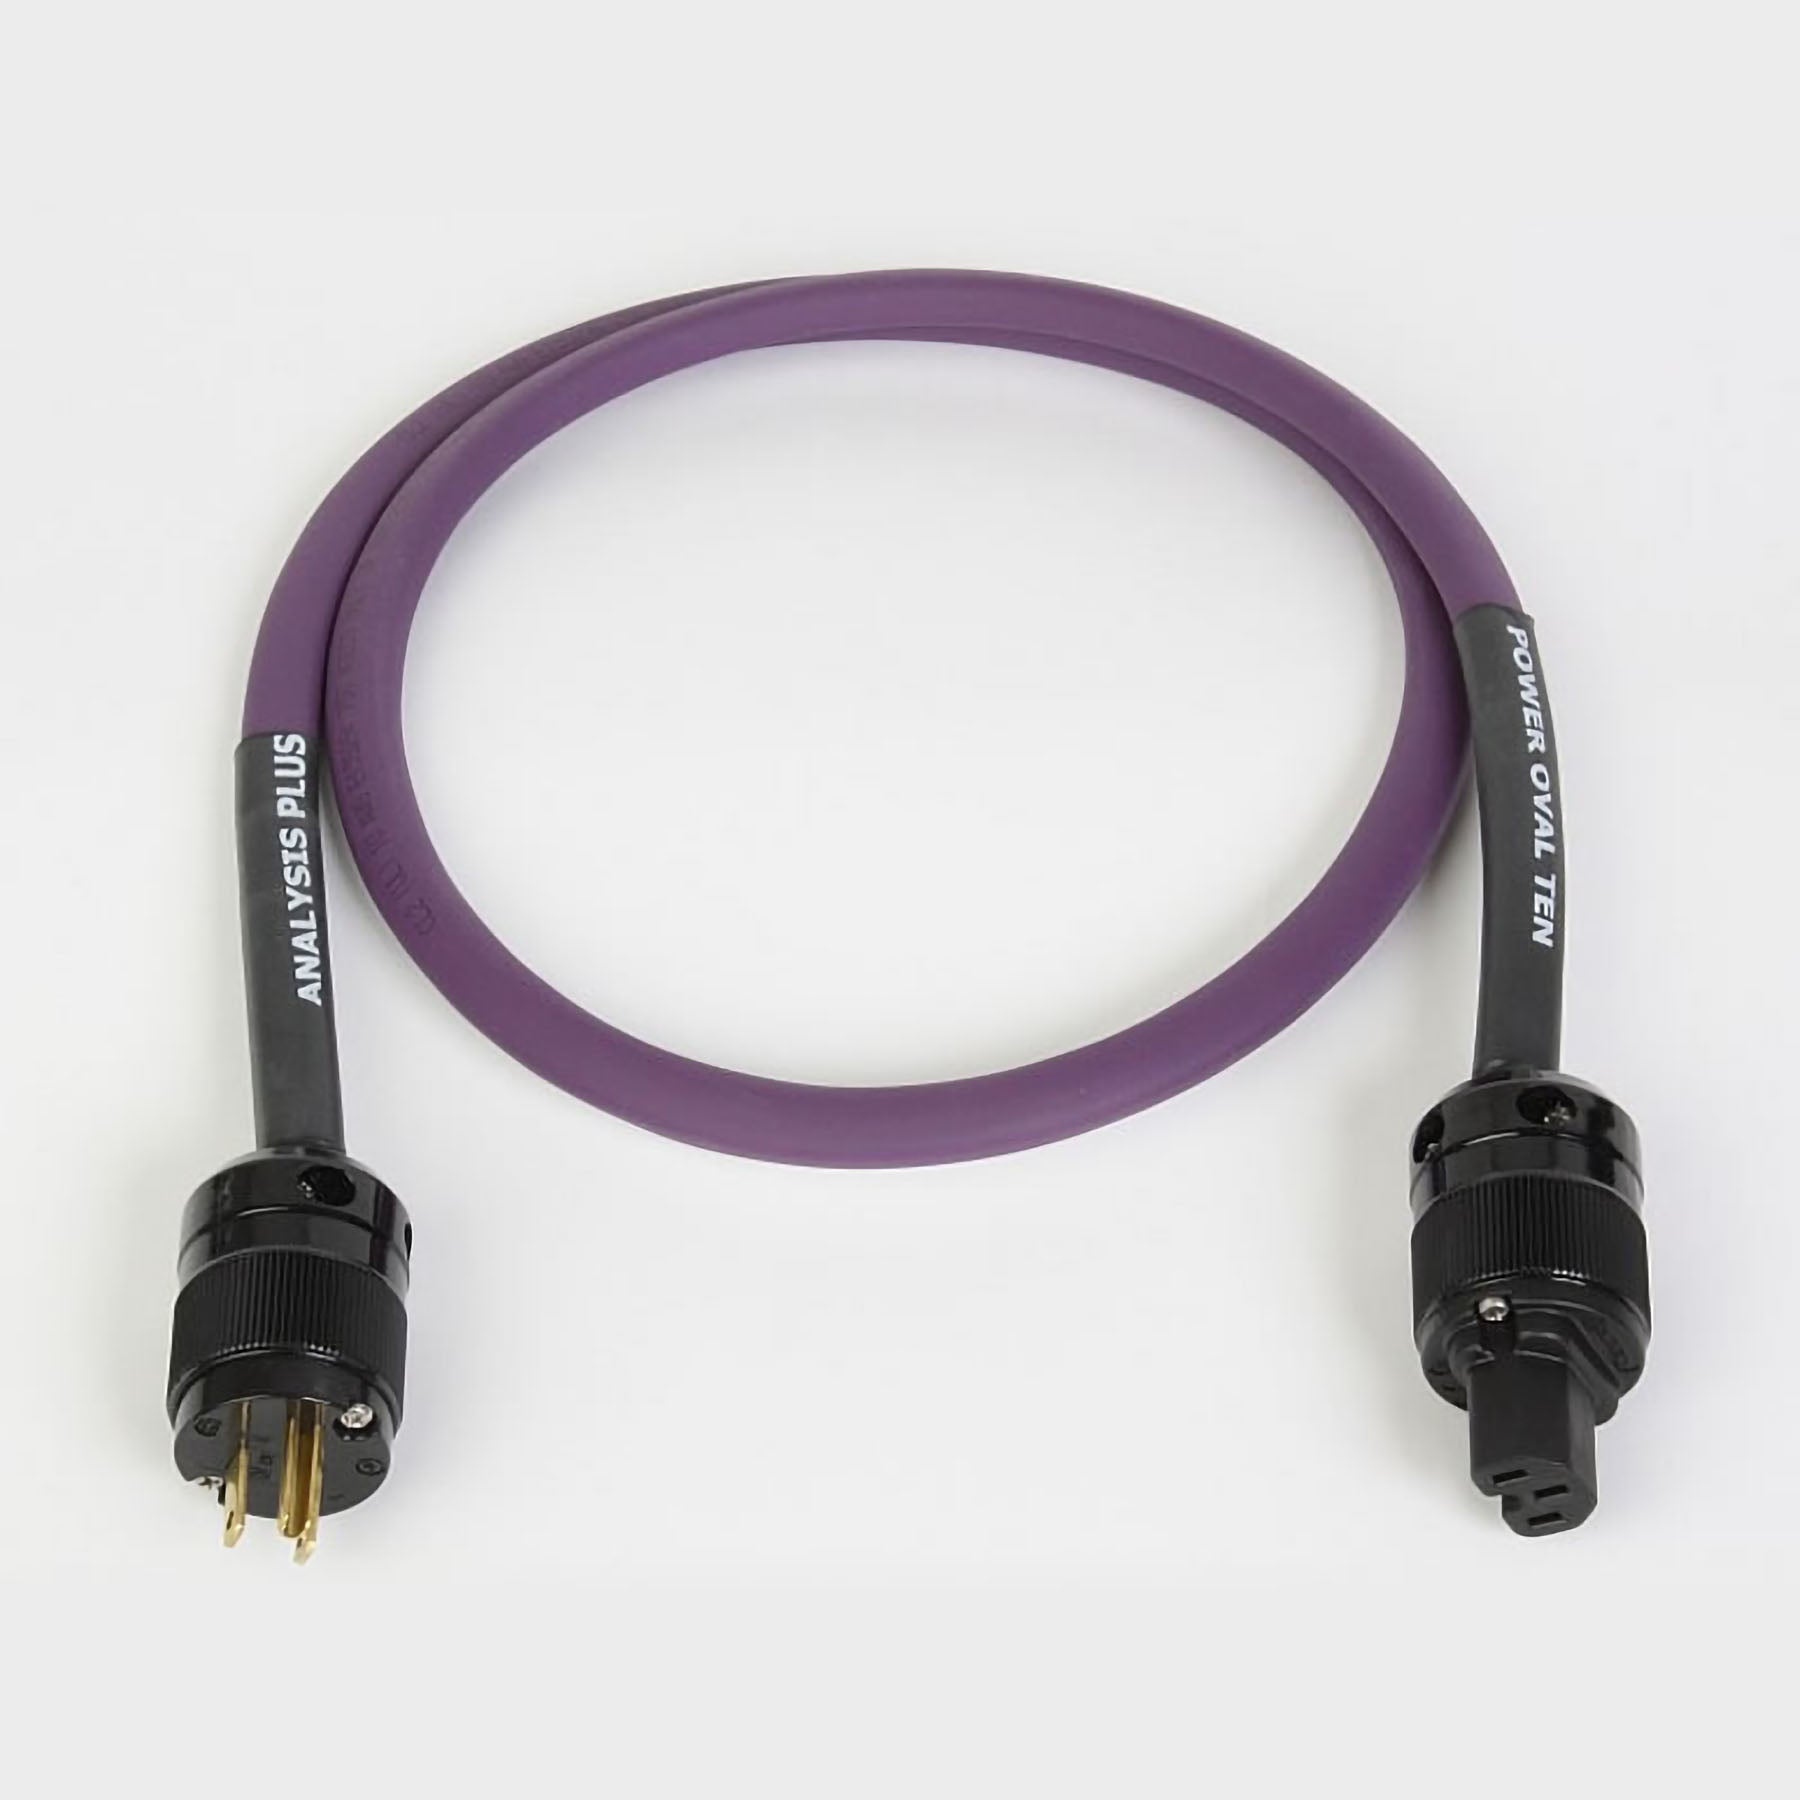 Analysis Plus Oval 10 Power Cable 1.5m Purple Furutech Gold Plugs